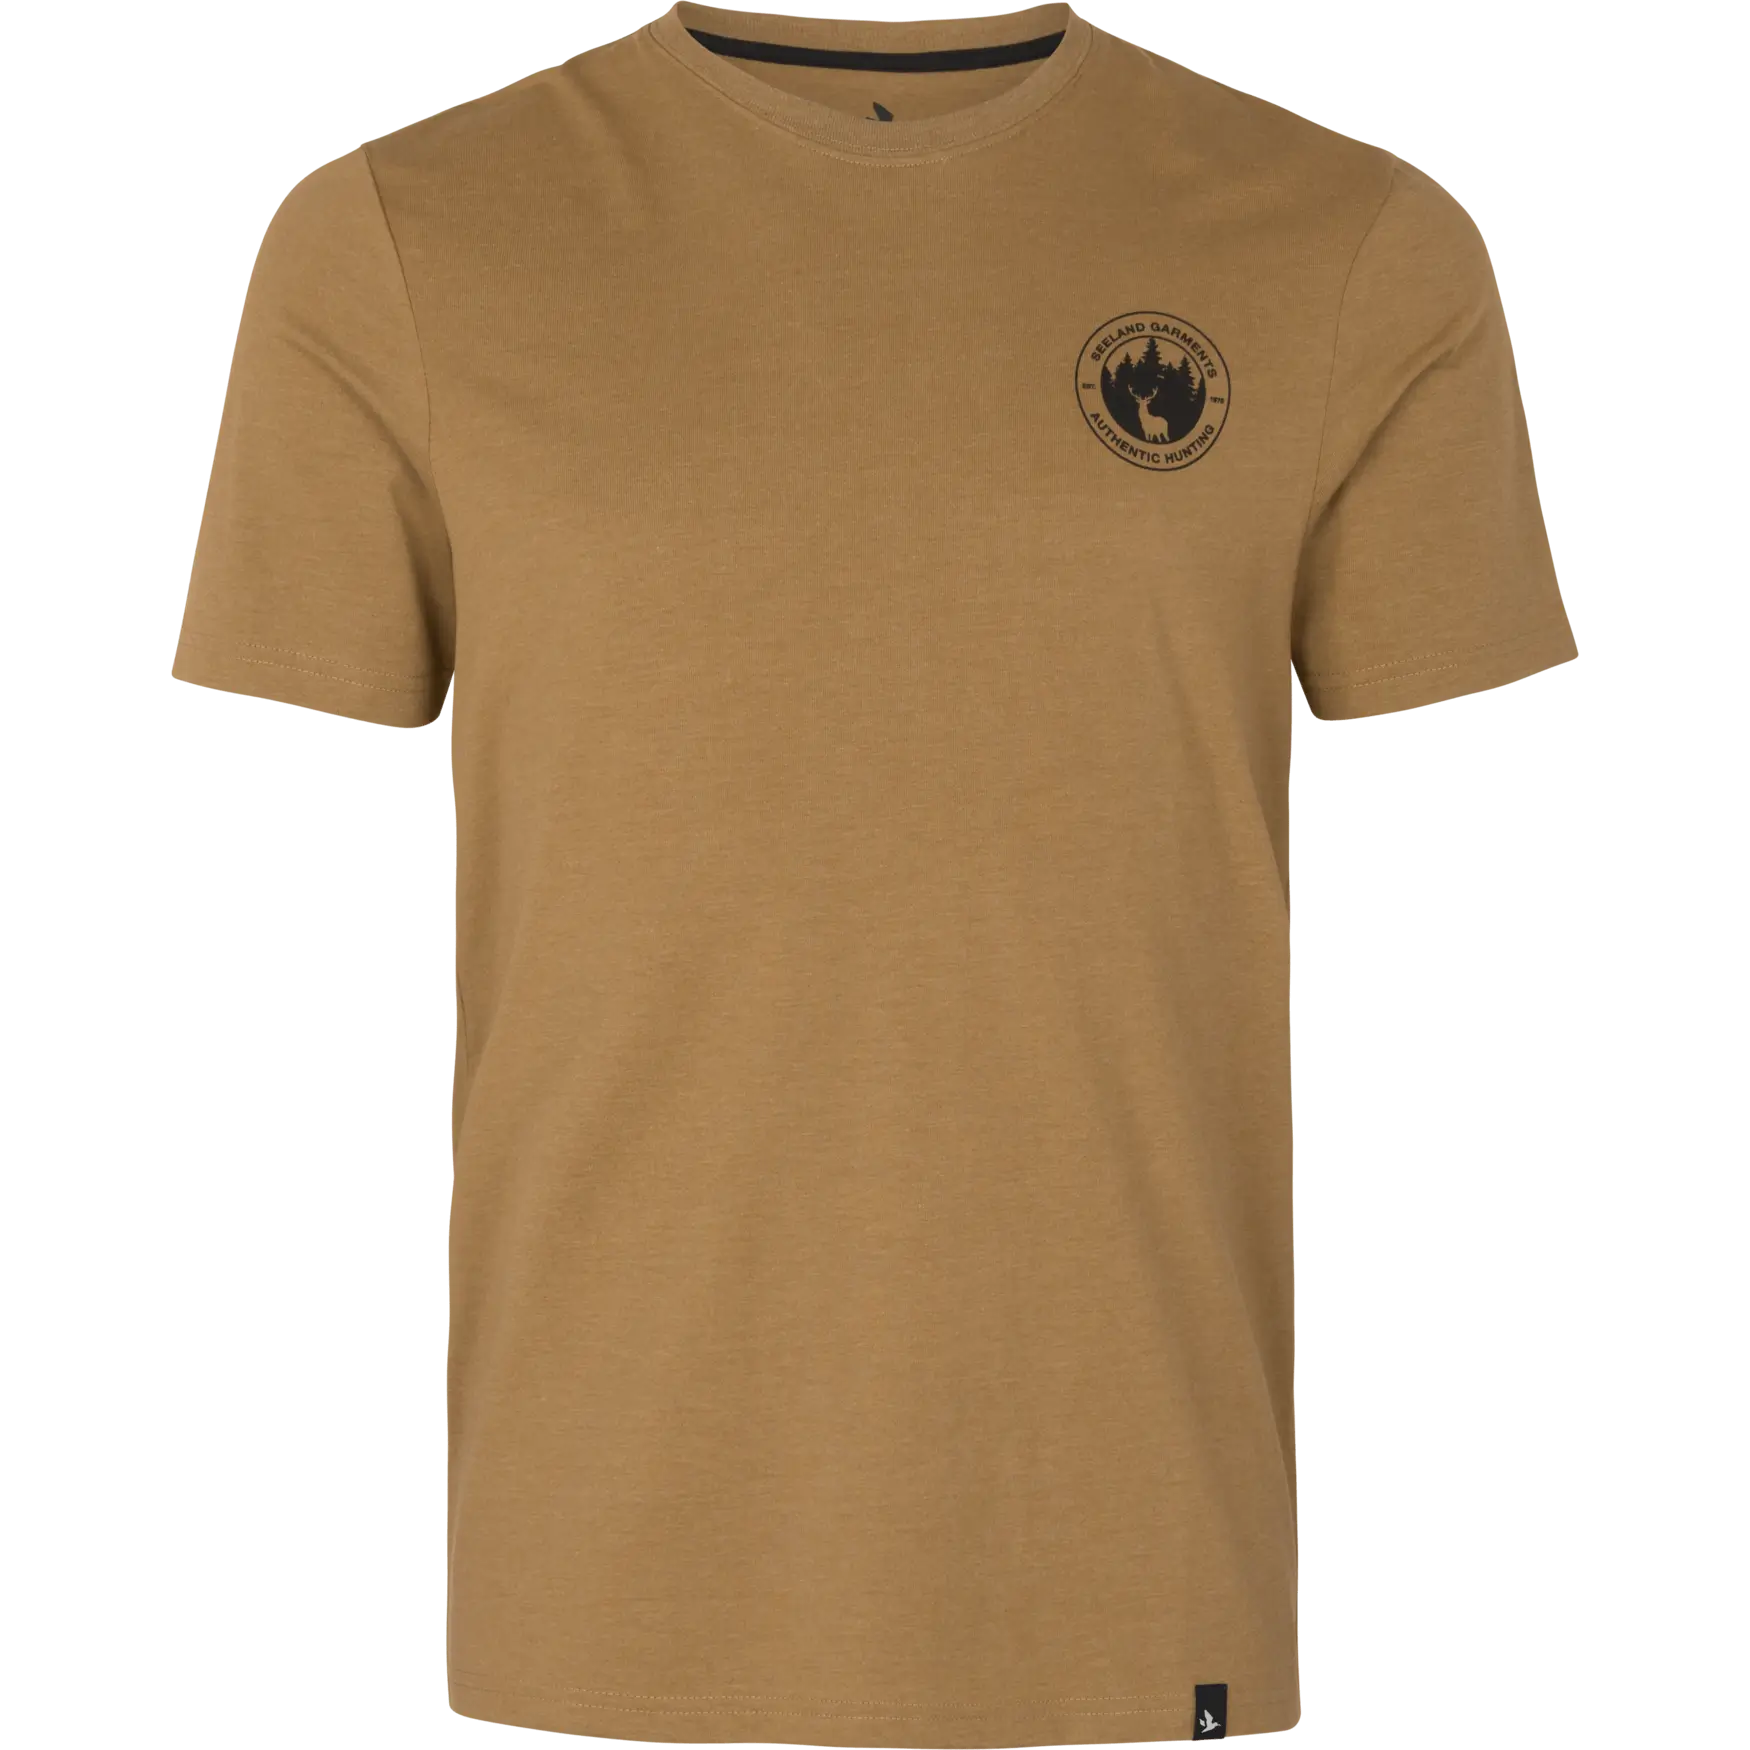 Seeland Saker Shirt in braun mit Frontprint